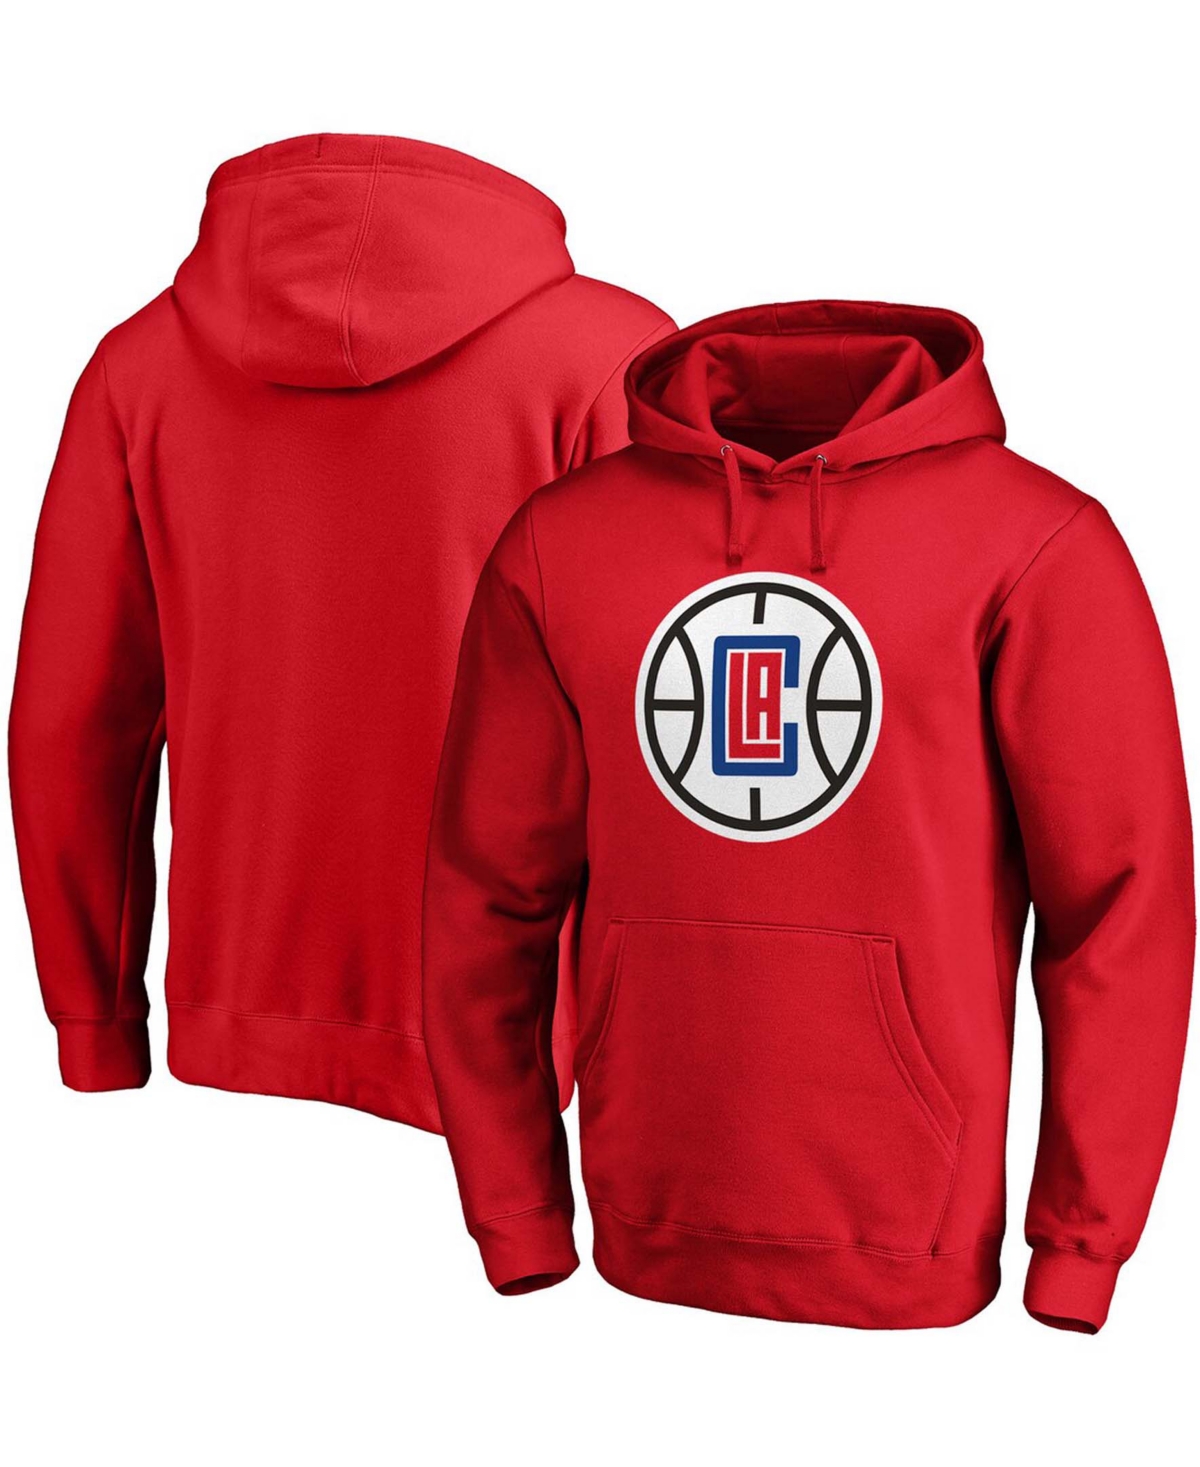 Fanatics Men's Red La Clippers Primary Team Logo Pullover Hoodie